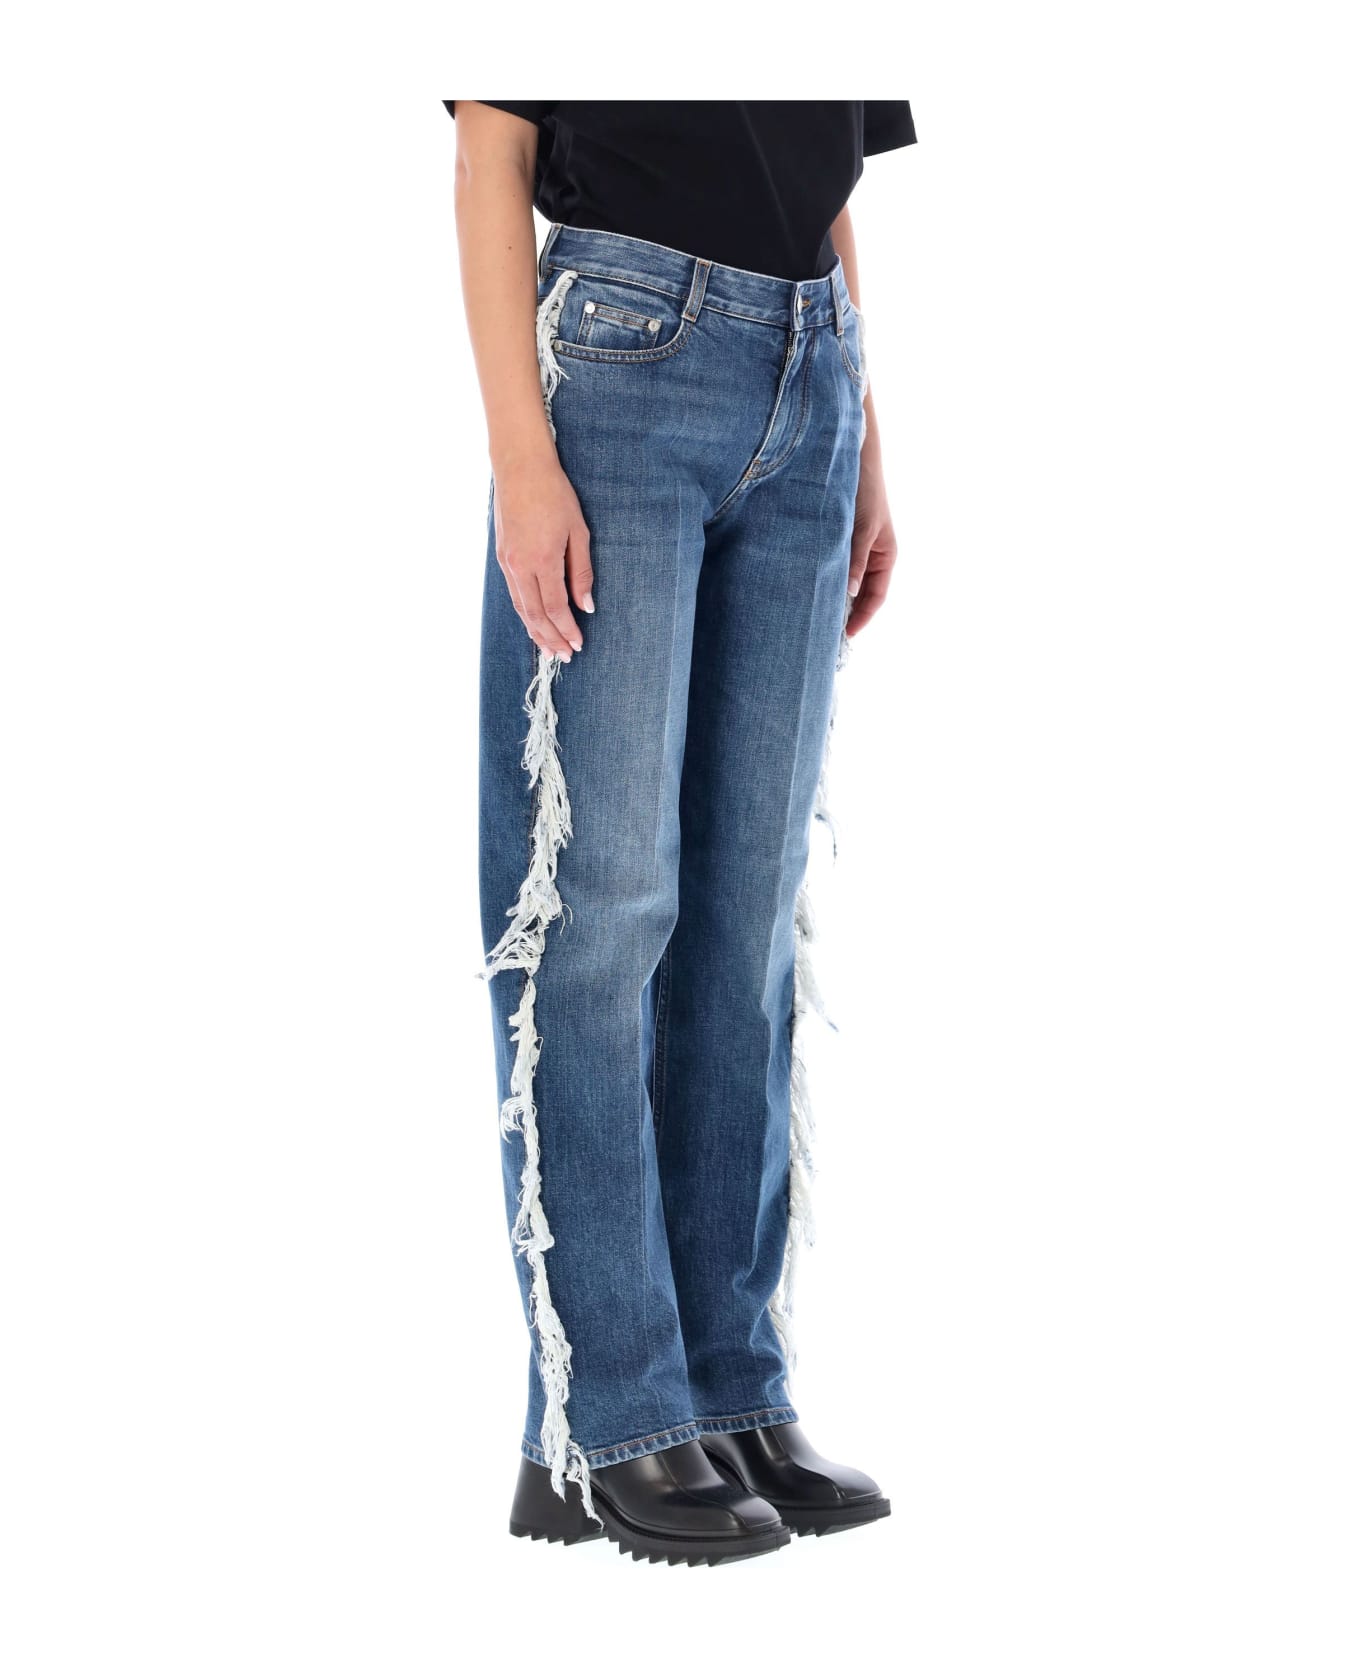 Stella McCartney Fringed Straight Leg Jeans - VINTAGE DARK デニム